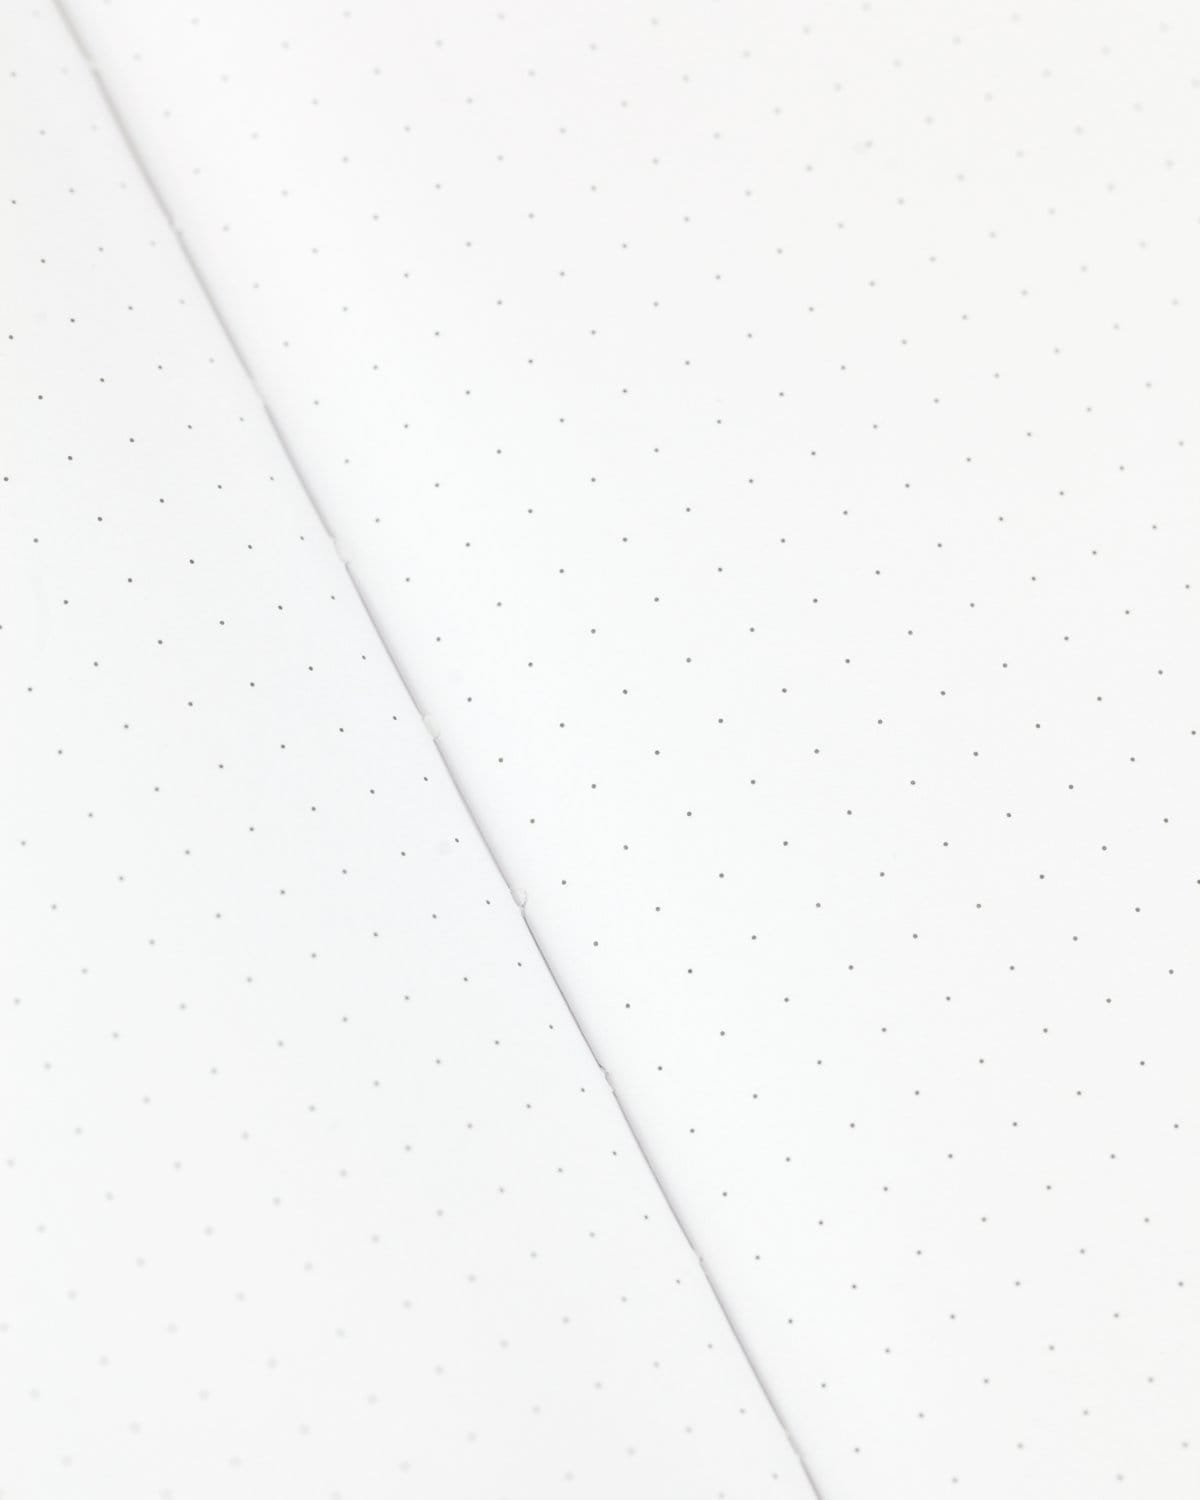 Ants Hardcover - Dot Grid Cognitive Surplus